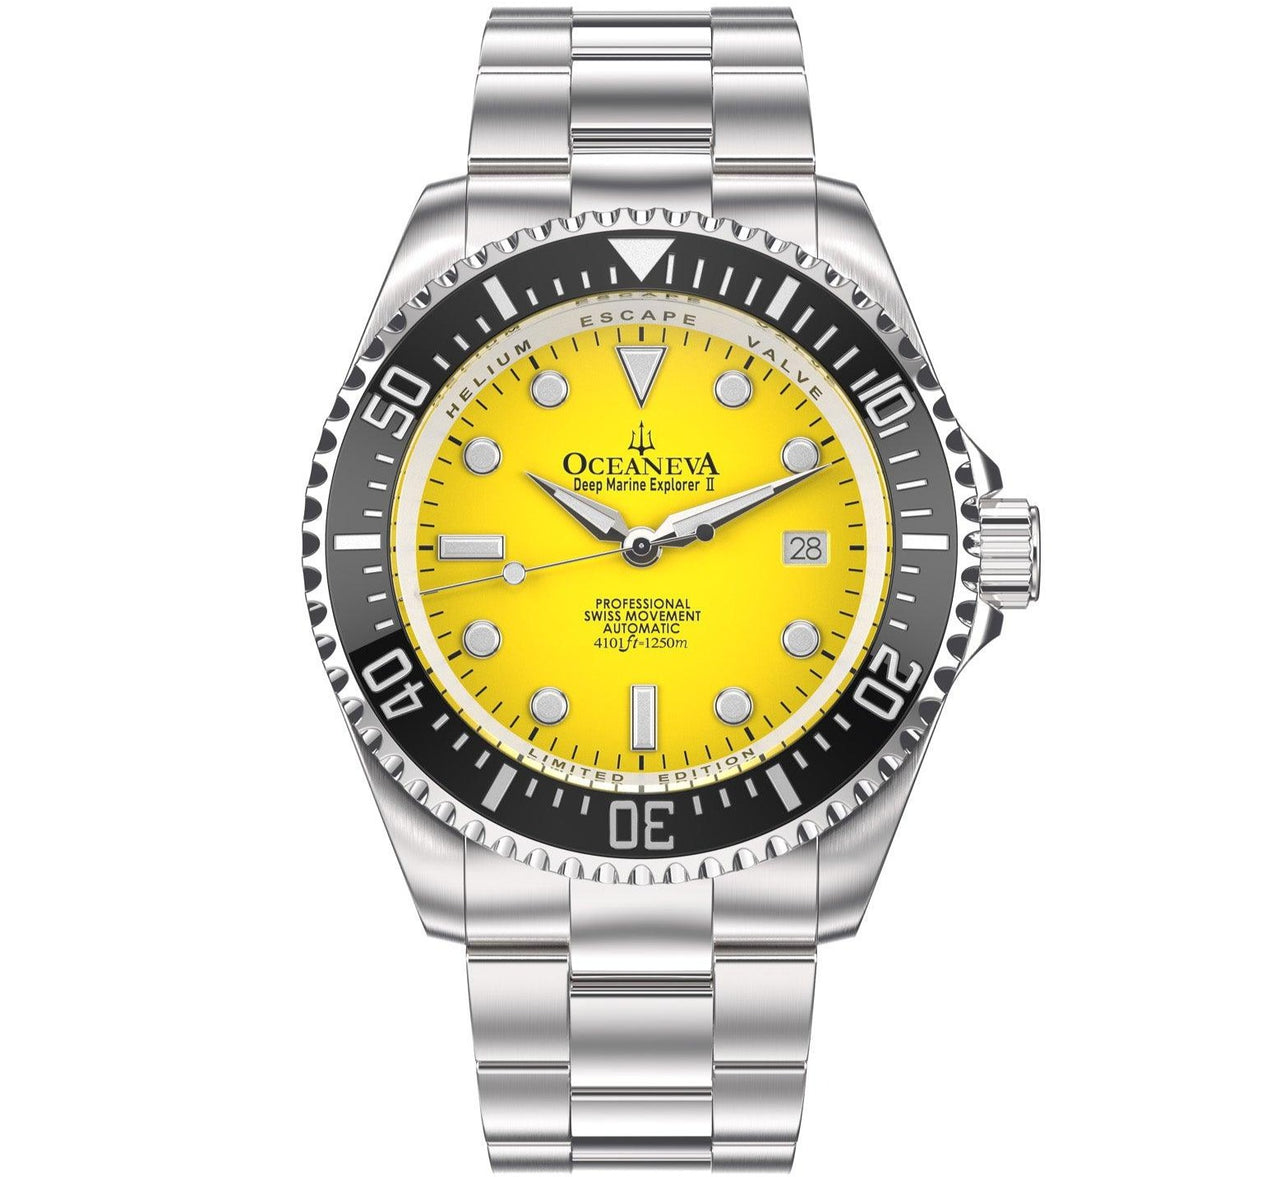 Oceaneva Men's Deep Marine Explorer II 1250M Pro Diver Watch Yellow - BKII200YLST 1000M, 1250M, 316L Stainless Steel Watch, Automatic Watch, BGW9 Swiss-Superluminova, Ceramic Bezel, Dive Watch, Sw200-1 Swiss Automatic Movement